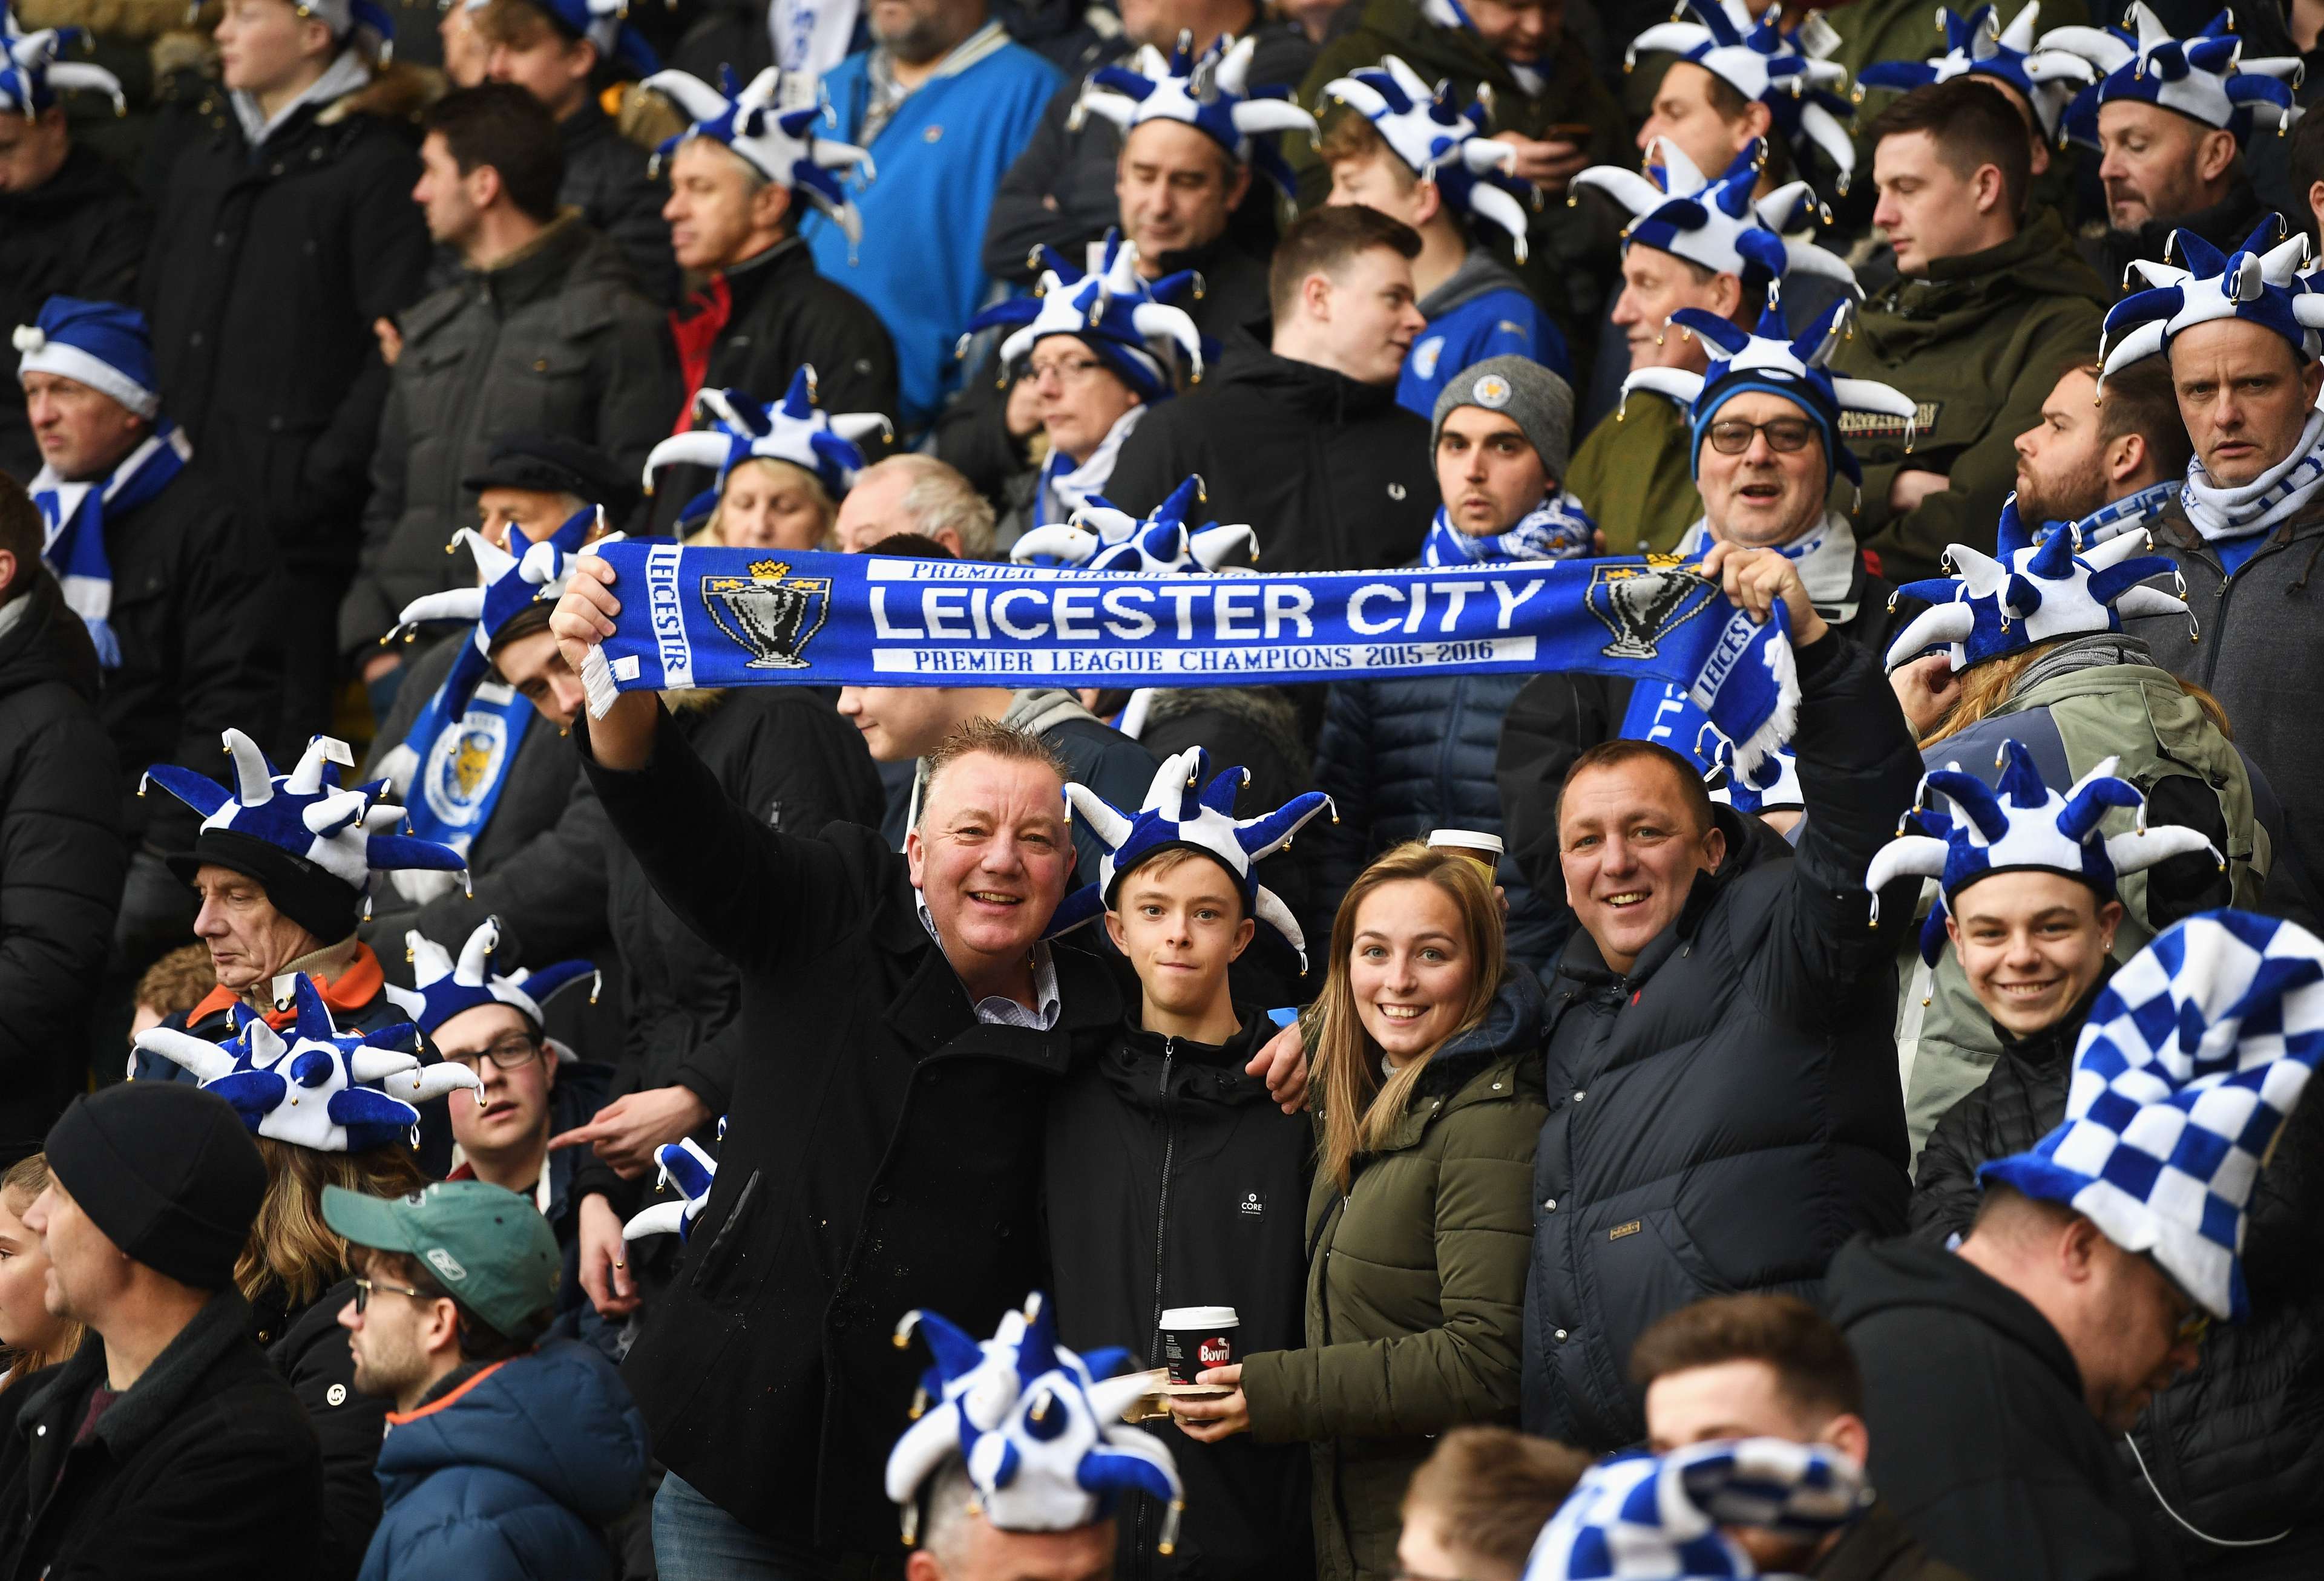 Leicester City fans